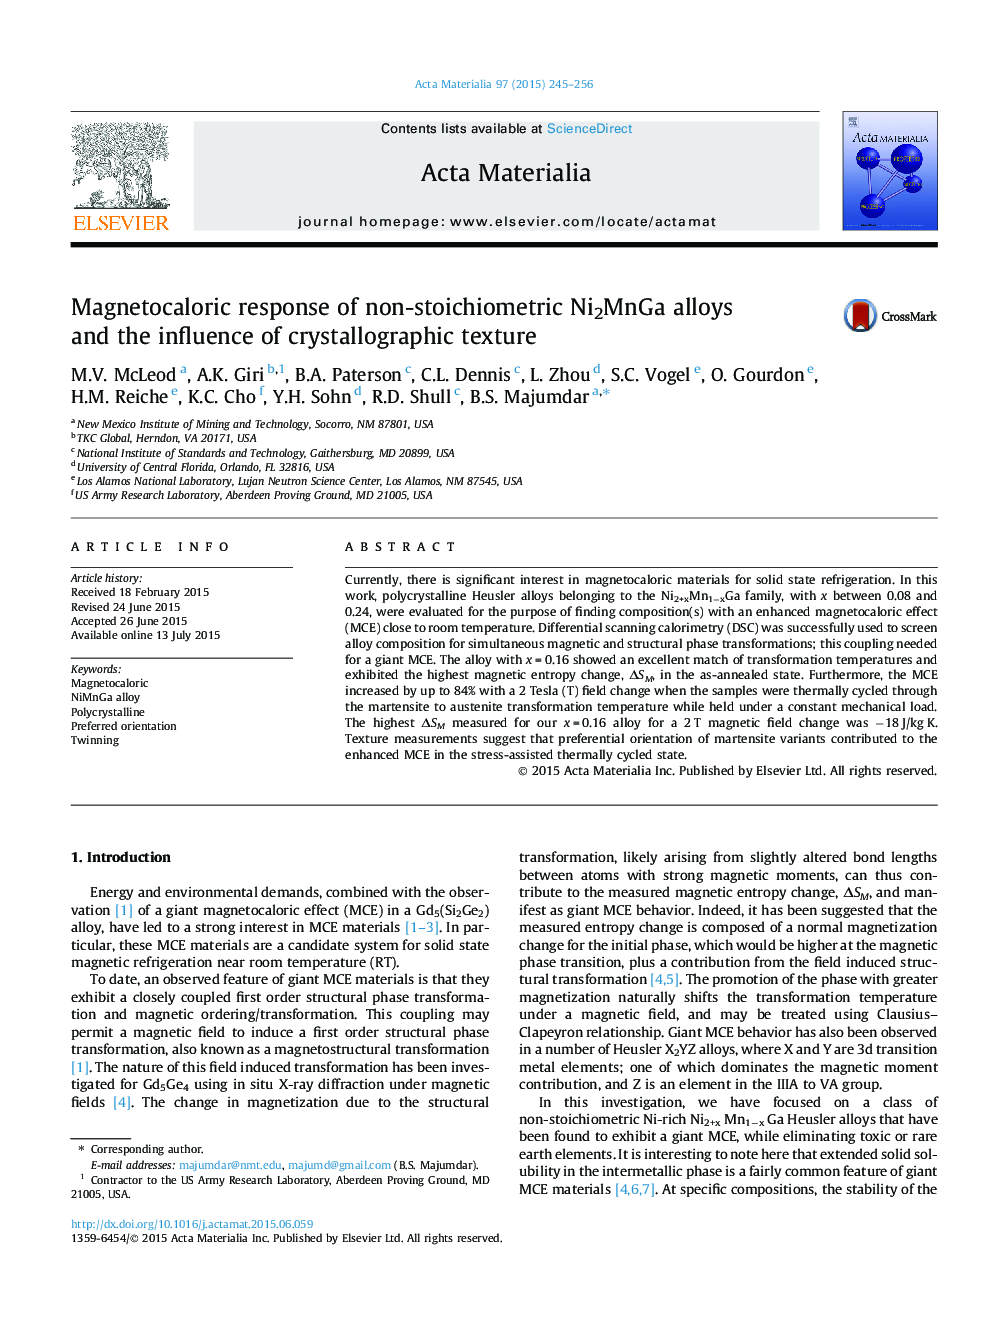 Magnetocaloric response of non-stoichiometric Ni2MnGa alloys and the influence of crystallographic texture